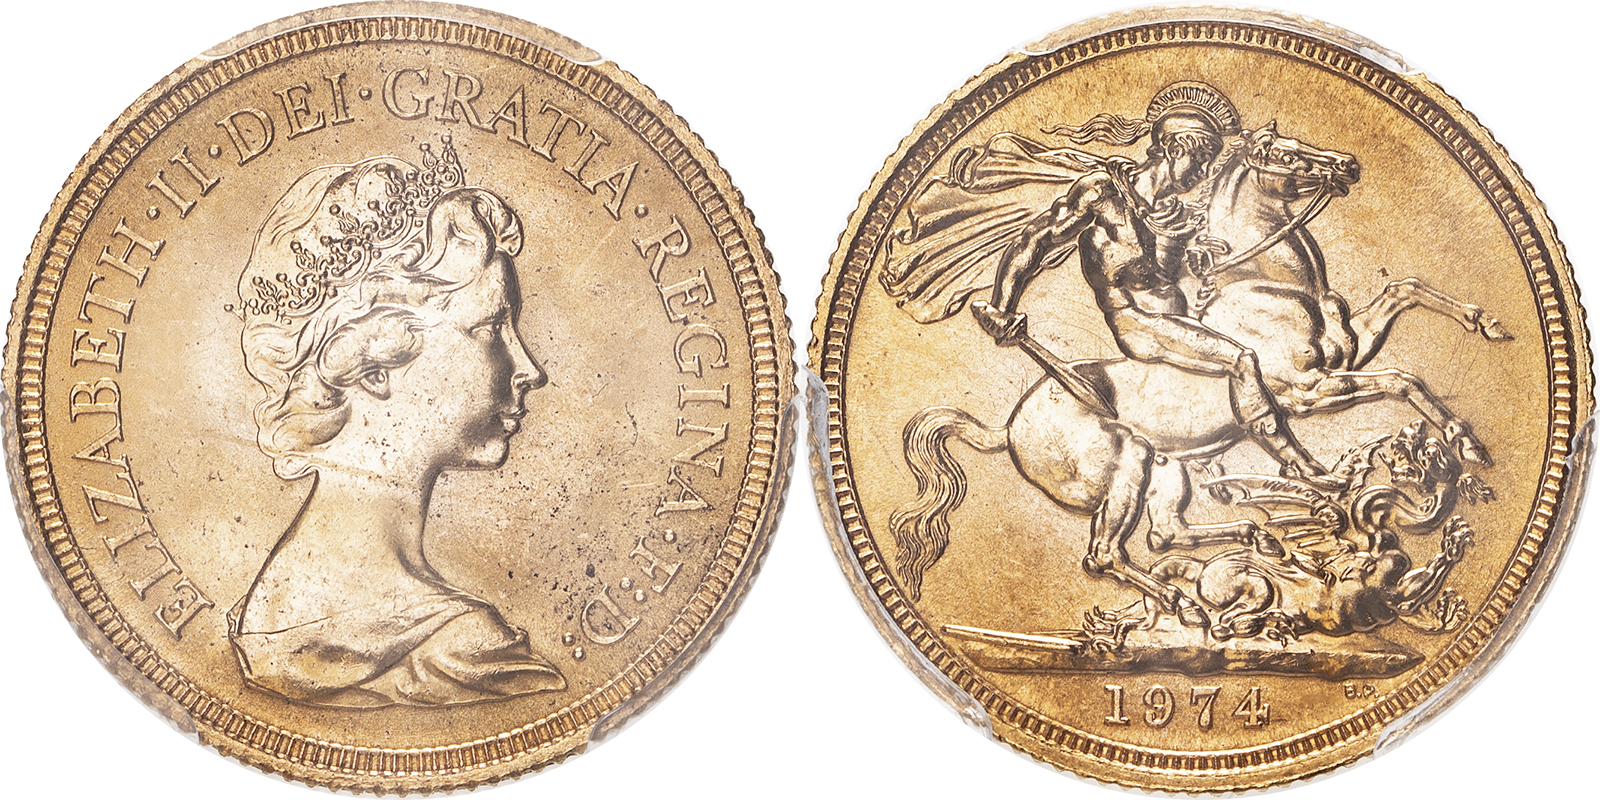 Lot 56: United Kingdom Elizabeth II 1974 Gold Sovereign Equal-finest PCGS MS66 #44084270 (AGW=0.2355 oz.)